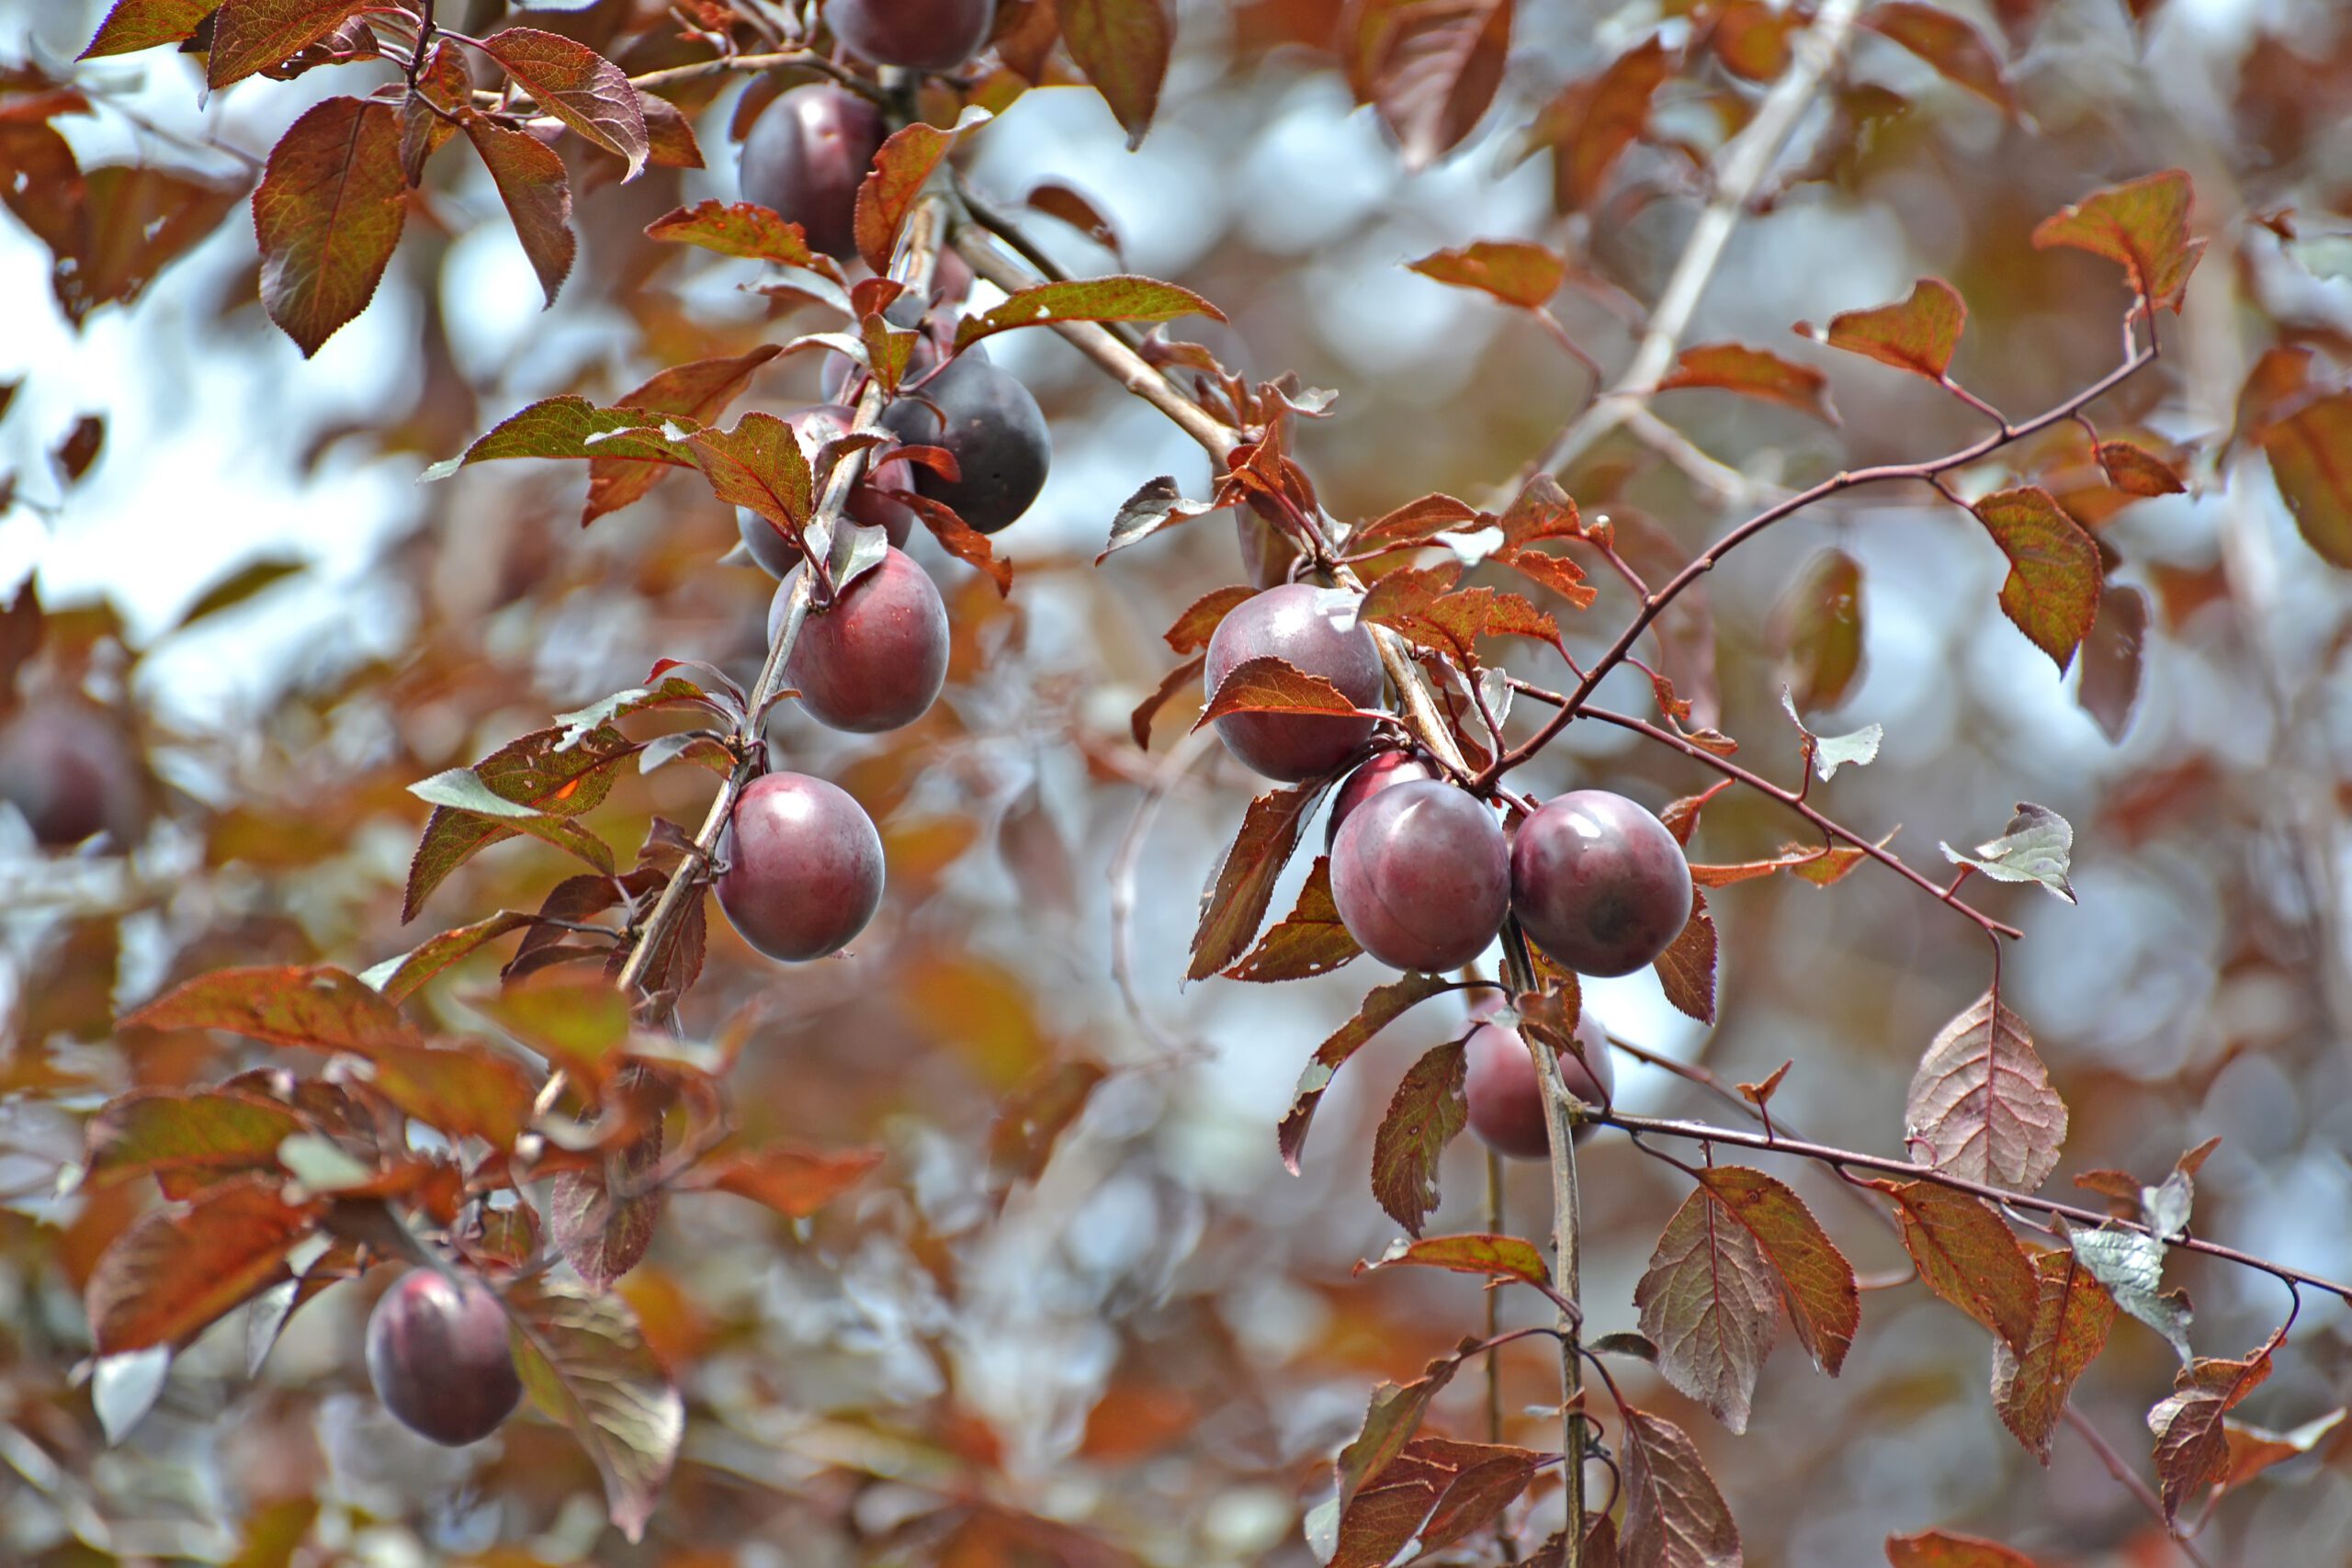 Prunus cerasifera pissardii fruits and foliage